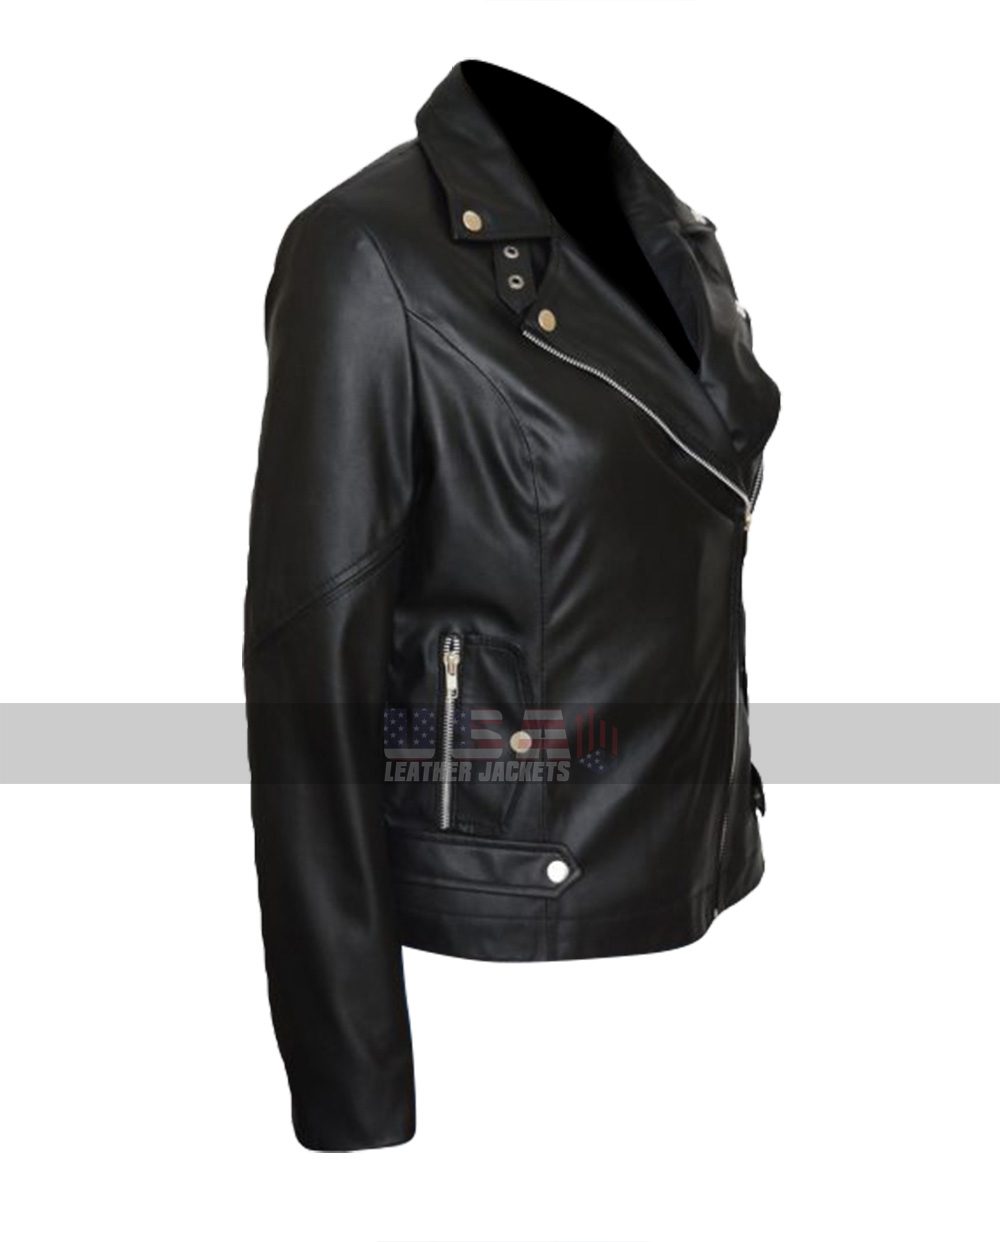 Unforgettable Poppy Montgomery (Carrie Wells) Biker Leather Jacket